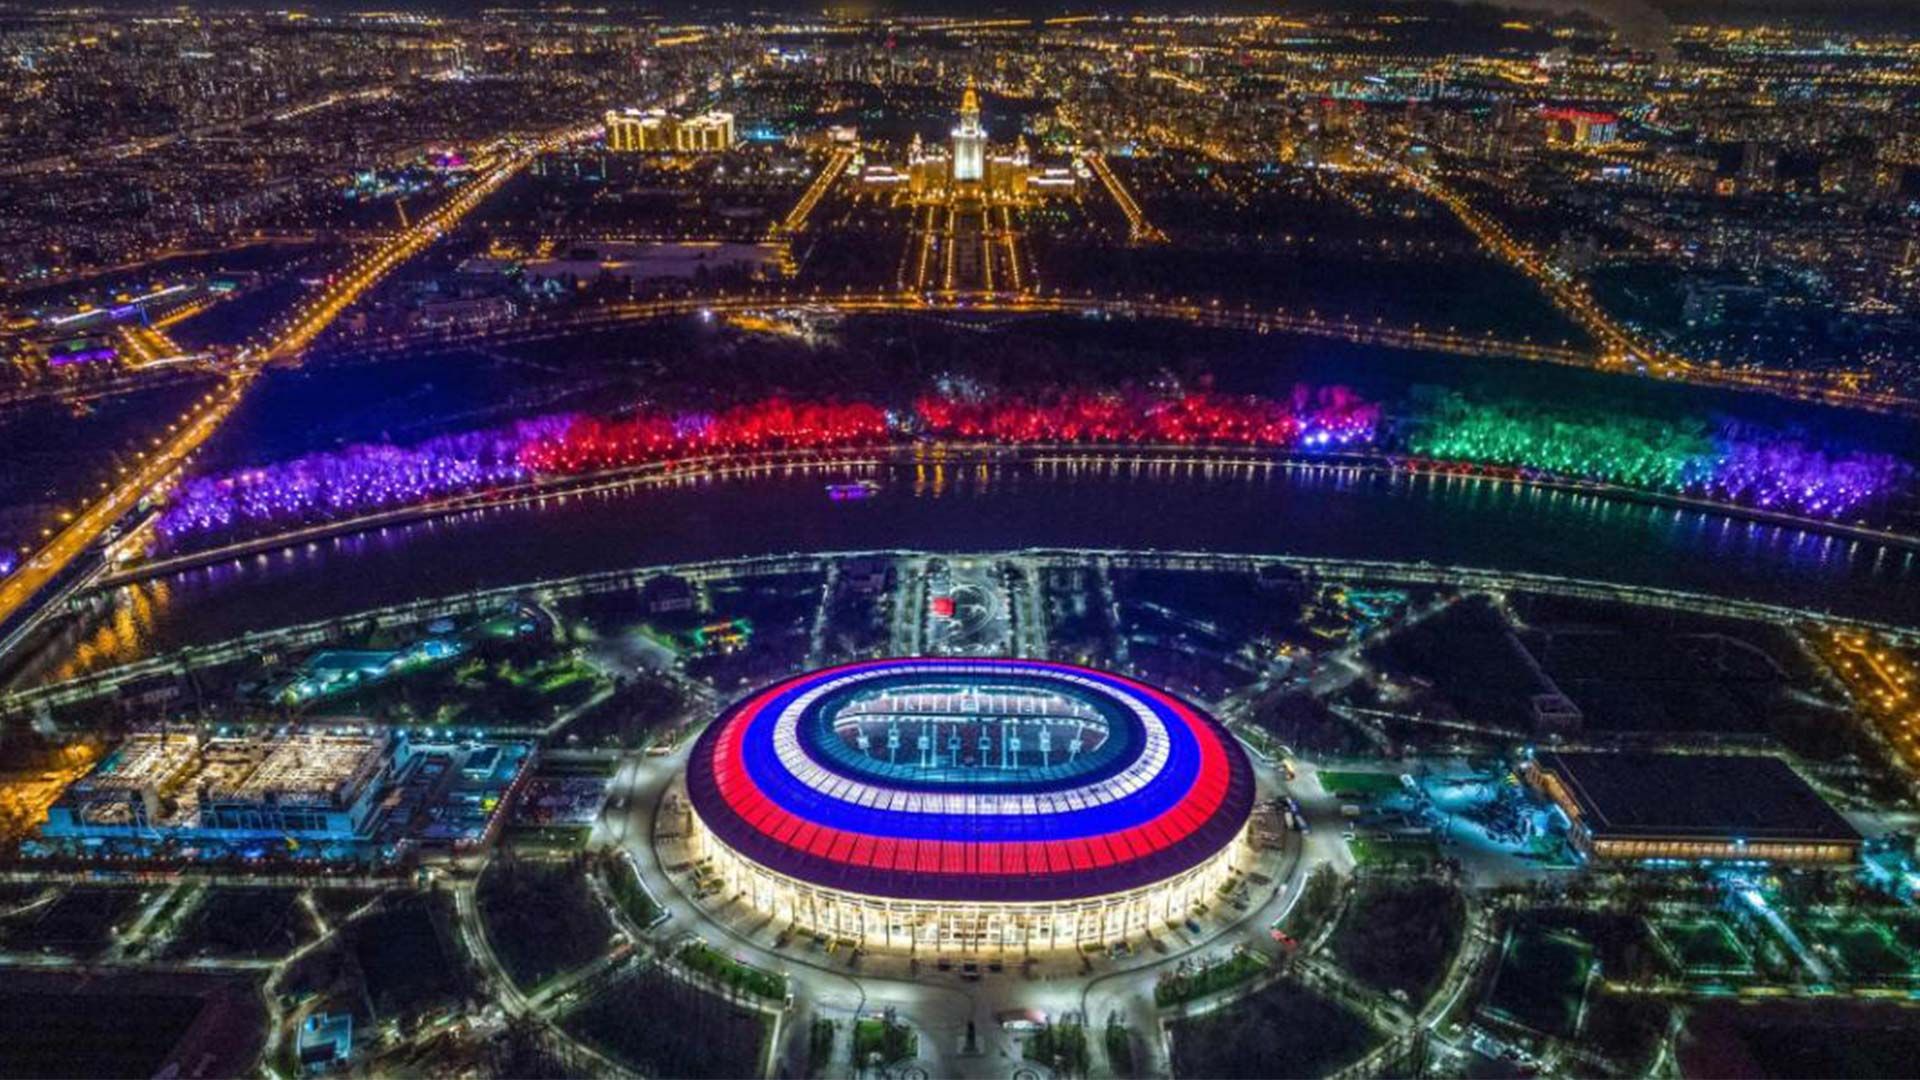 fifa-2018-world-cup-russia-stadiums-featured-20905133f31c861caa084bea01b96db2.jpg